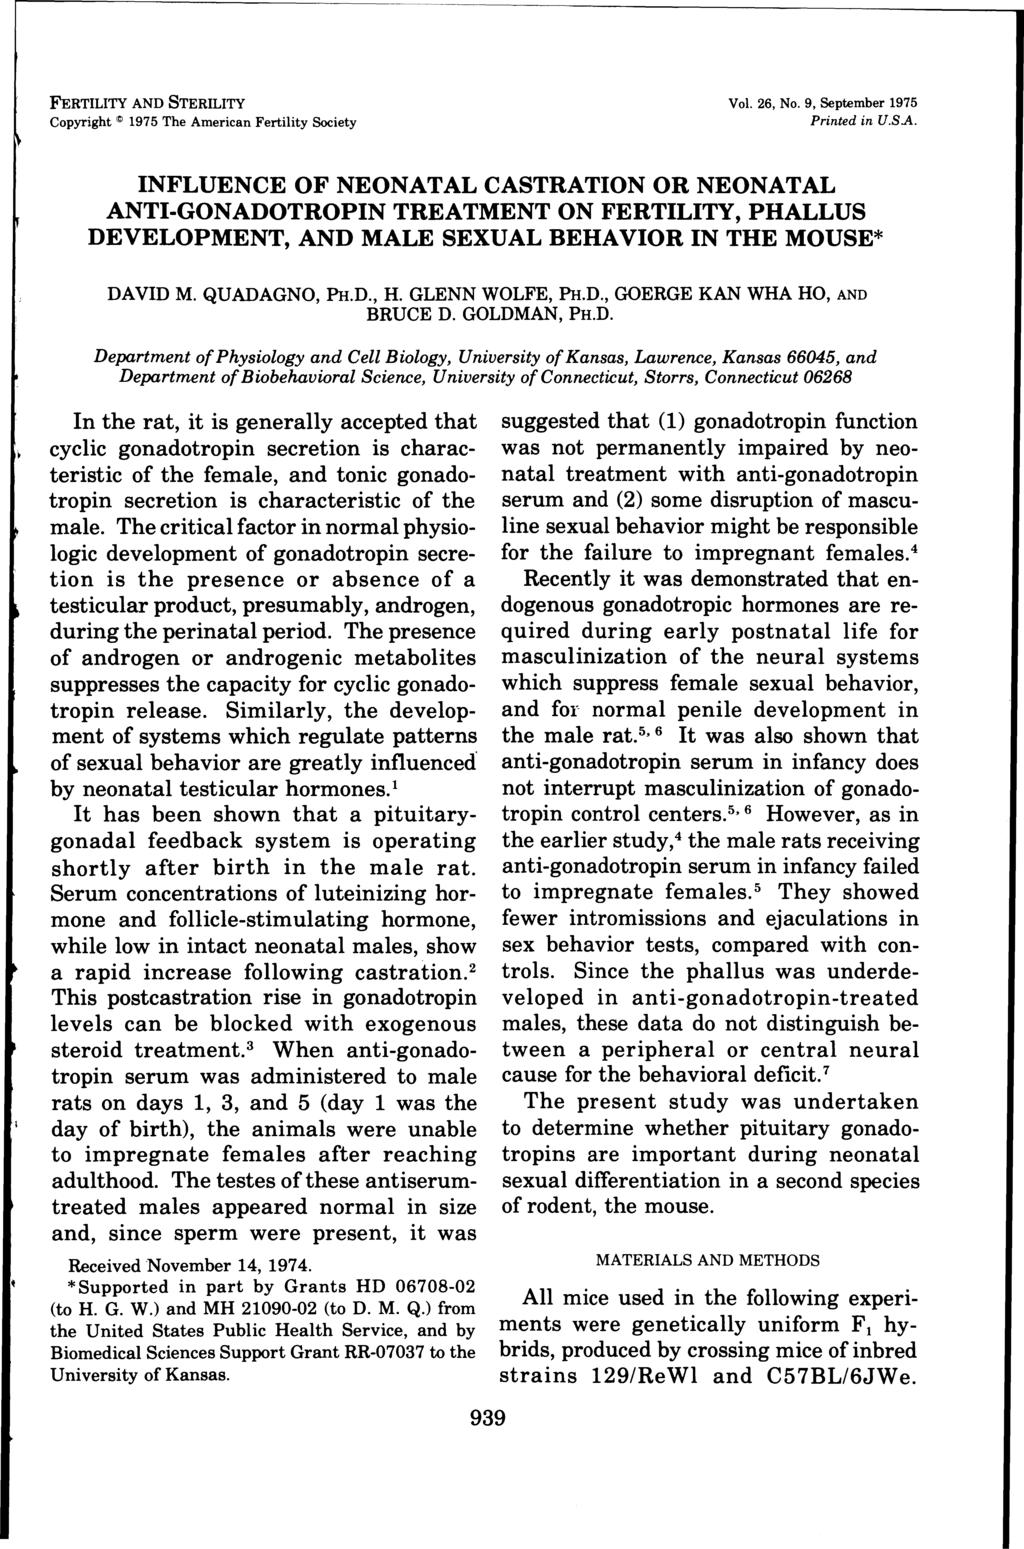 FERTILITY AND STERILITY Copyright 1975 The American Fertility Society Vol. 26, No.9. September 1975 Printed in U.SA.